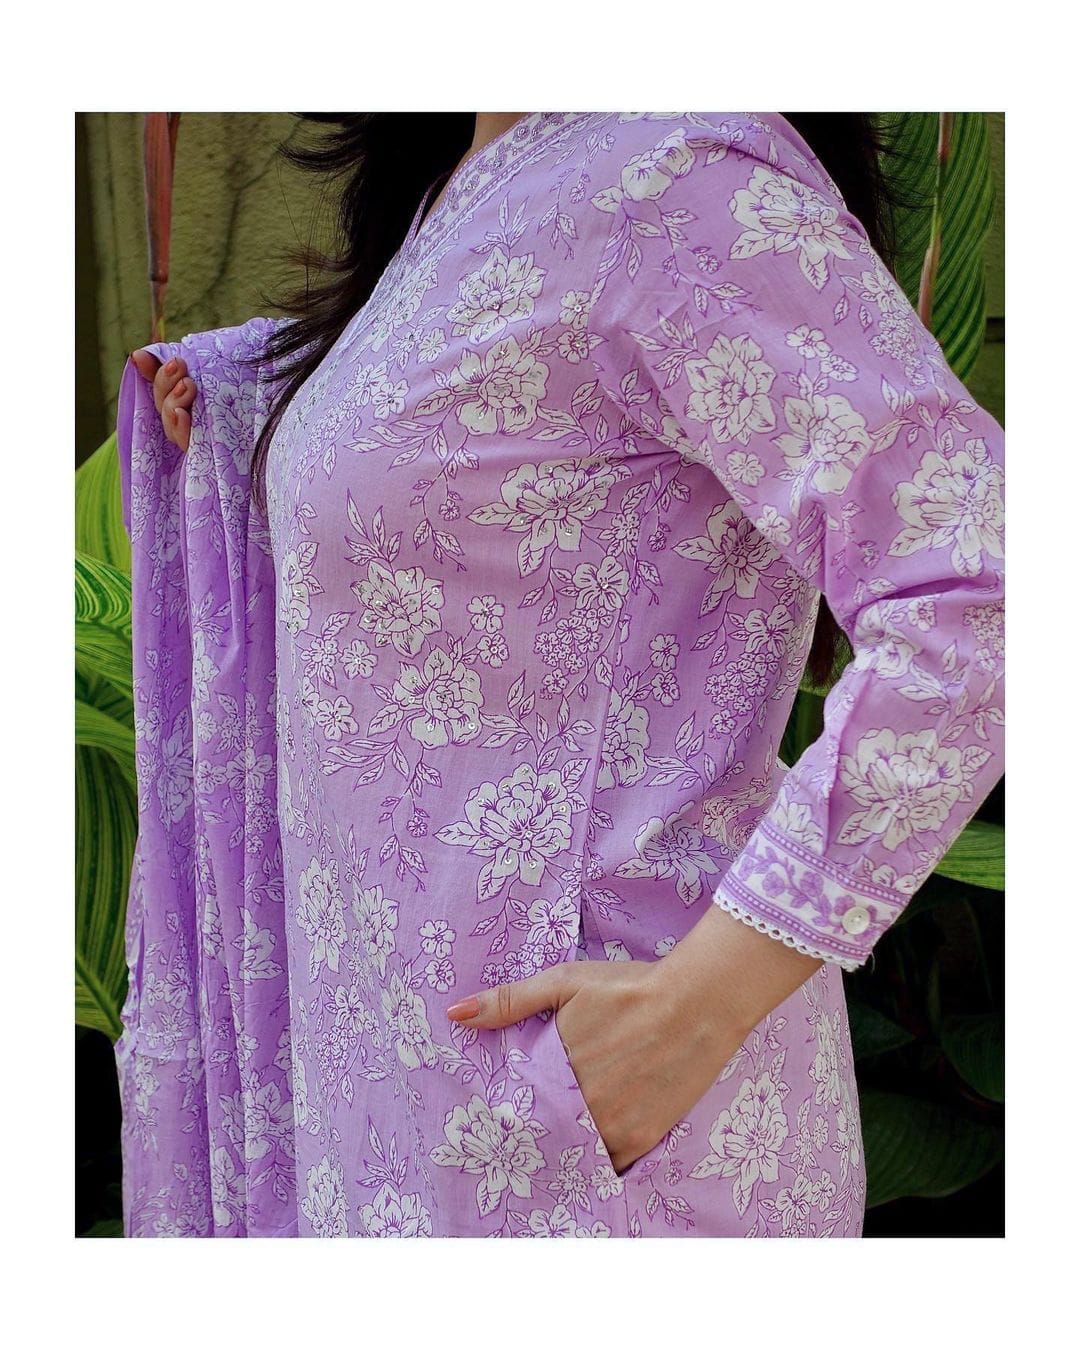 Maabeti Full Sleeves Lavender Suit